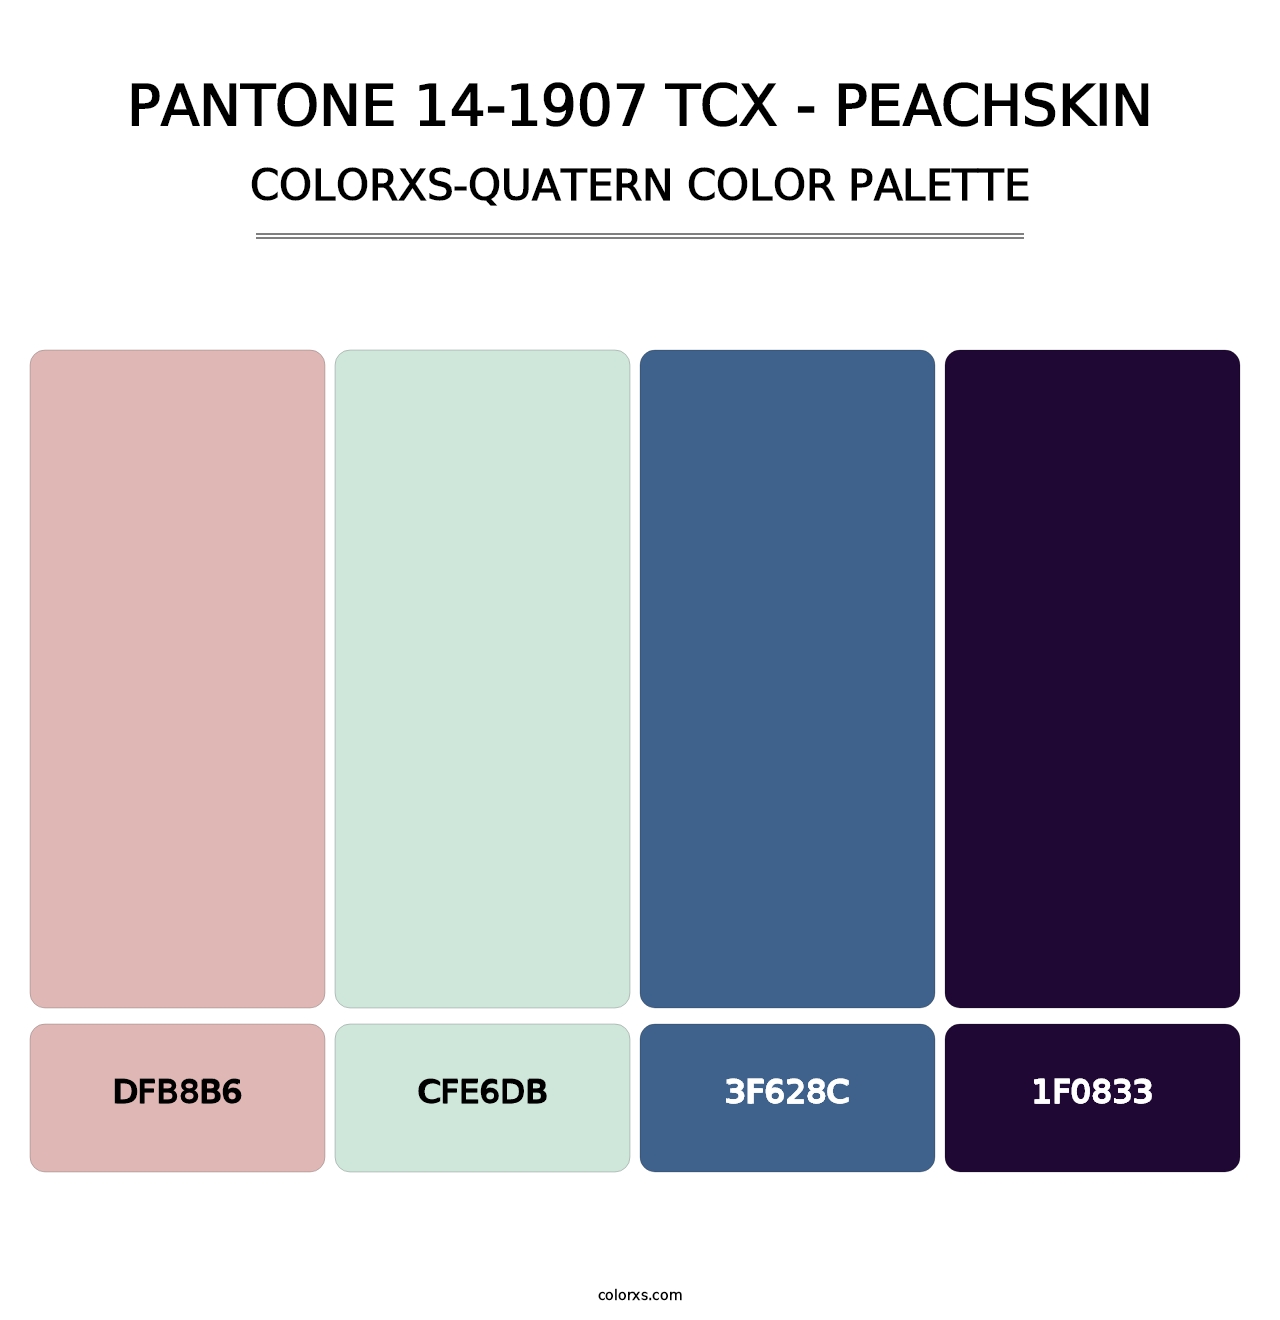 PANTONE 14-1907 TCX - Peachskin - Colorxs Quatern Palette